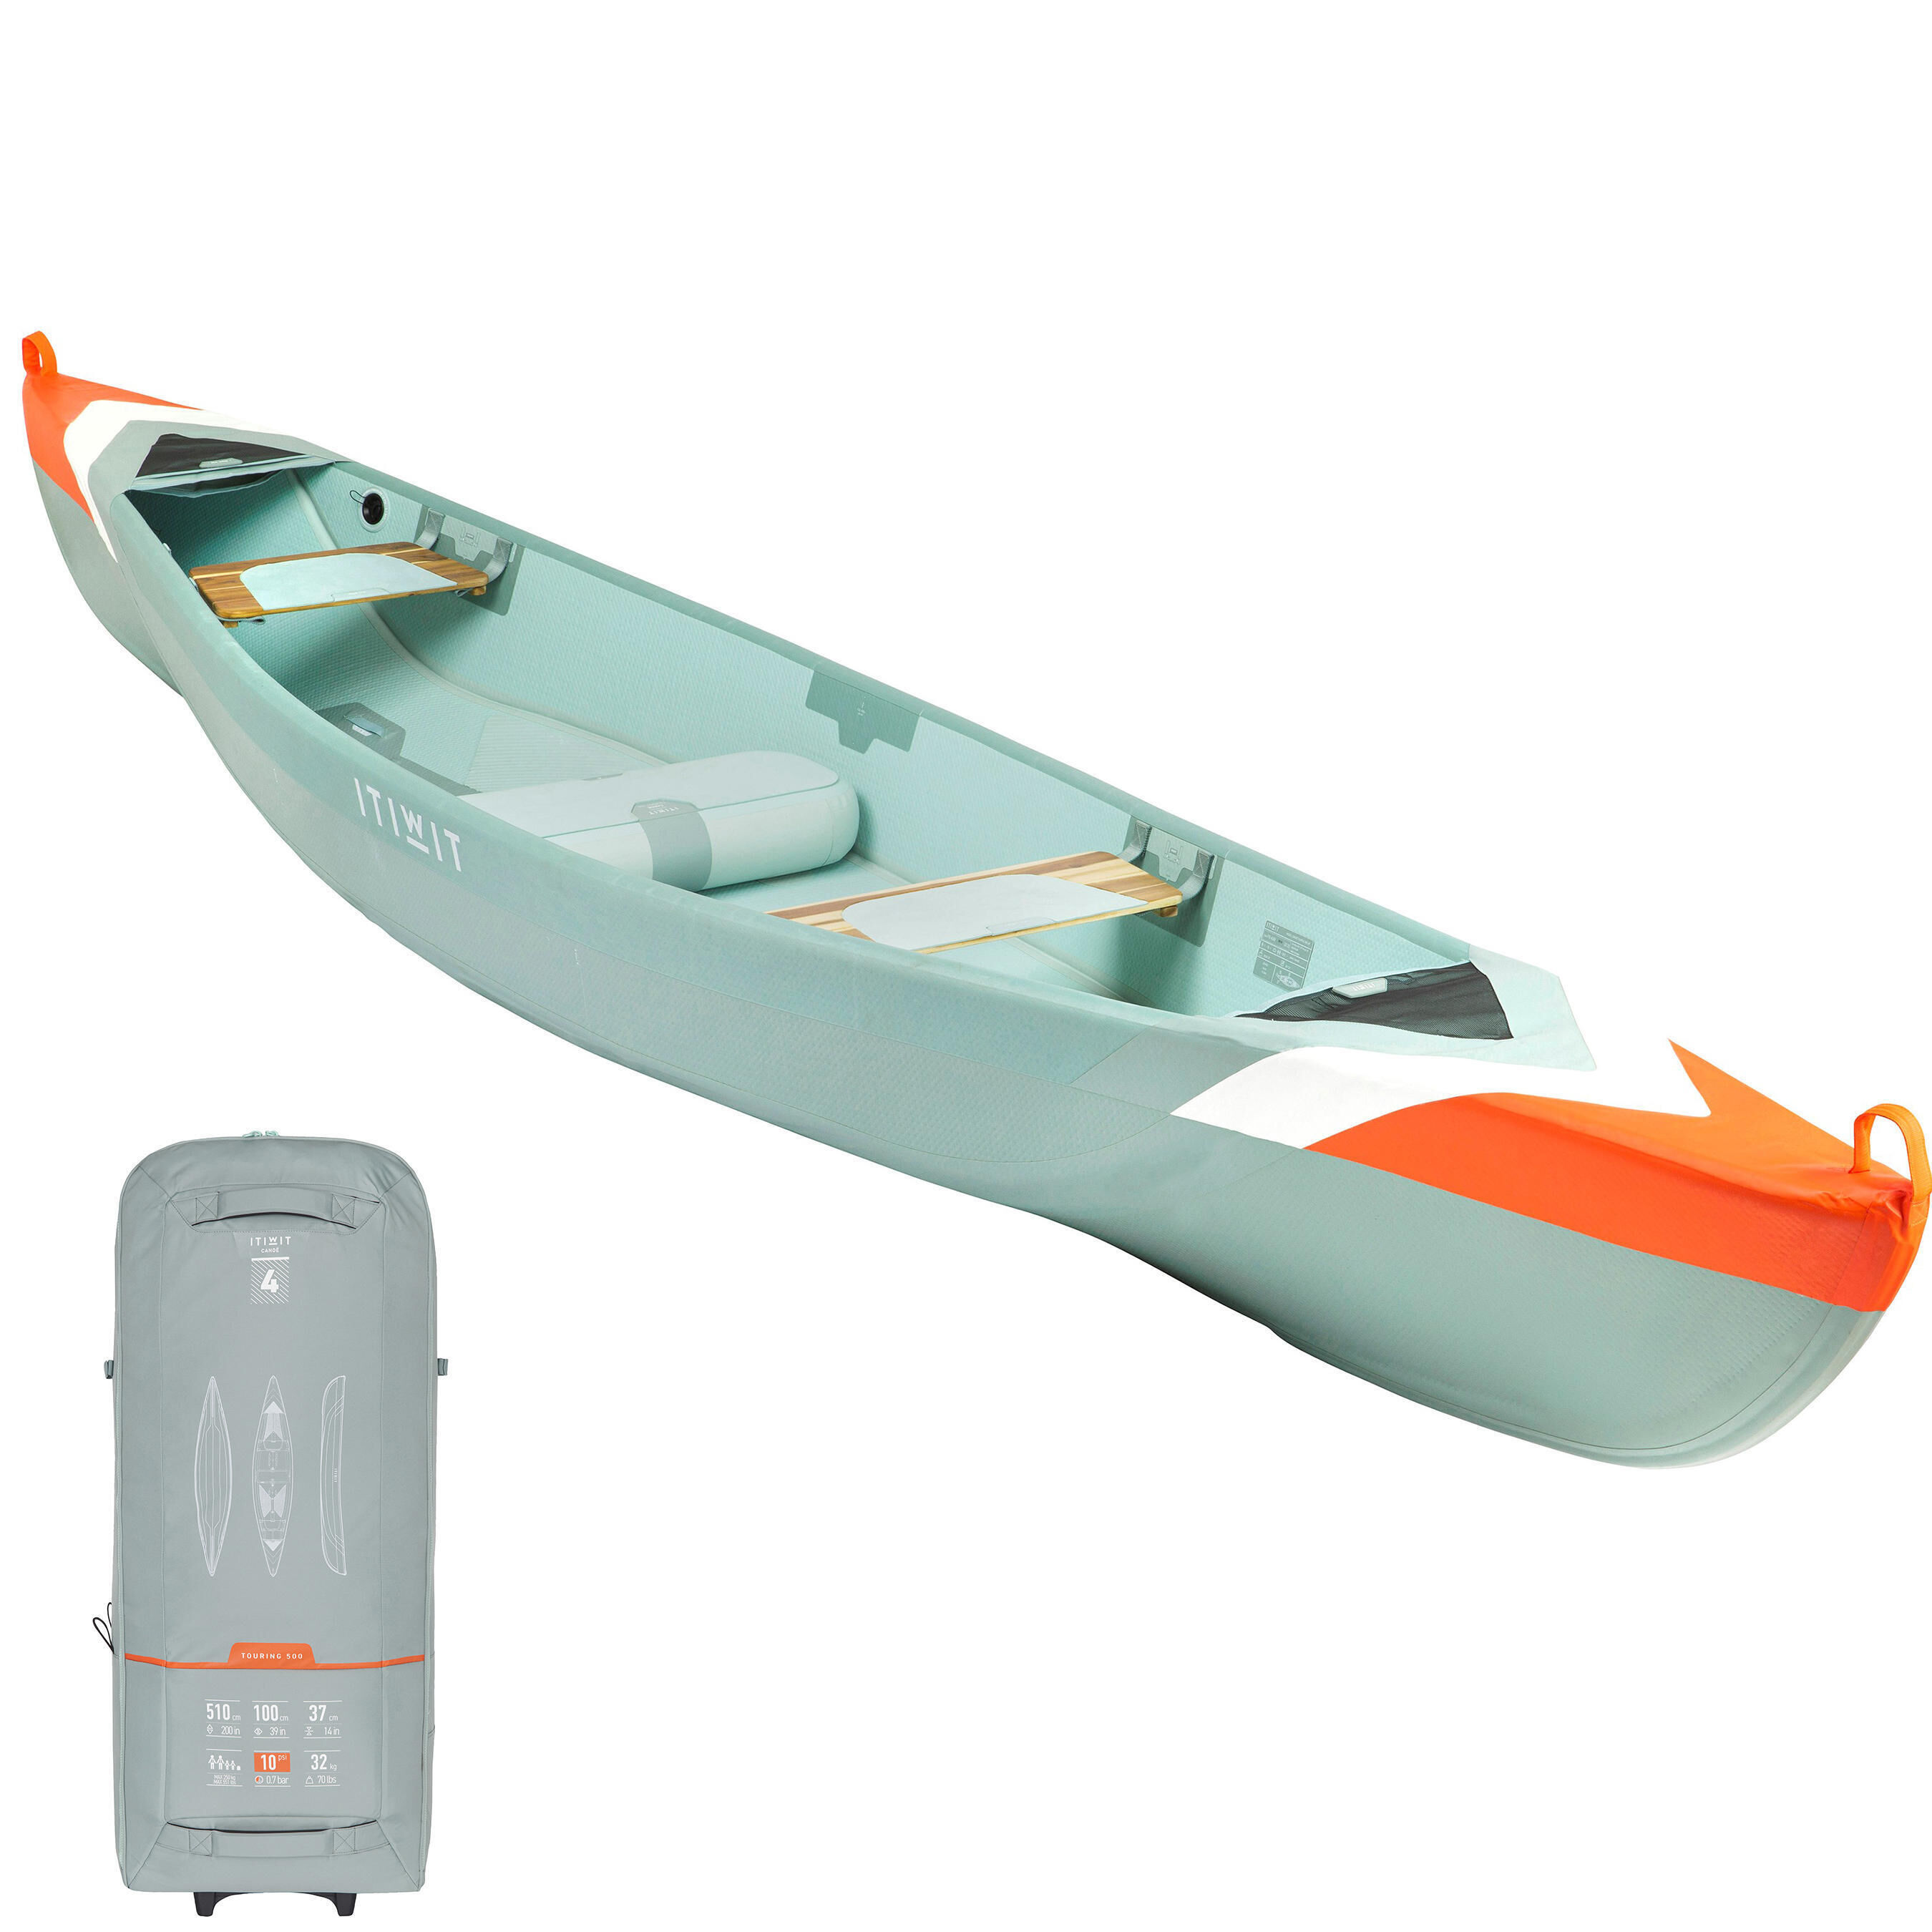 ITIWIT Refurbished X500 high pressure Dropstitch inflatable canoe 4 seats - A Grade